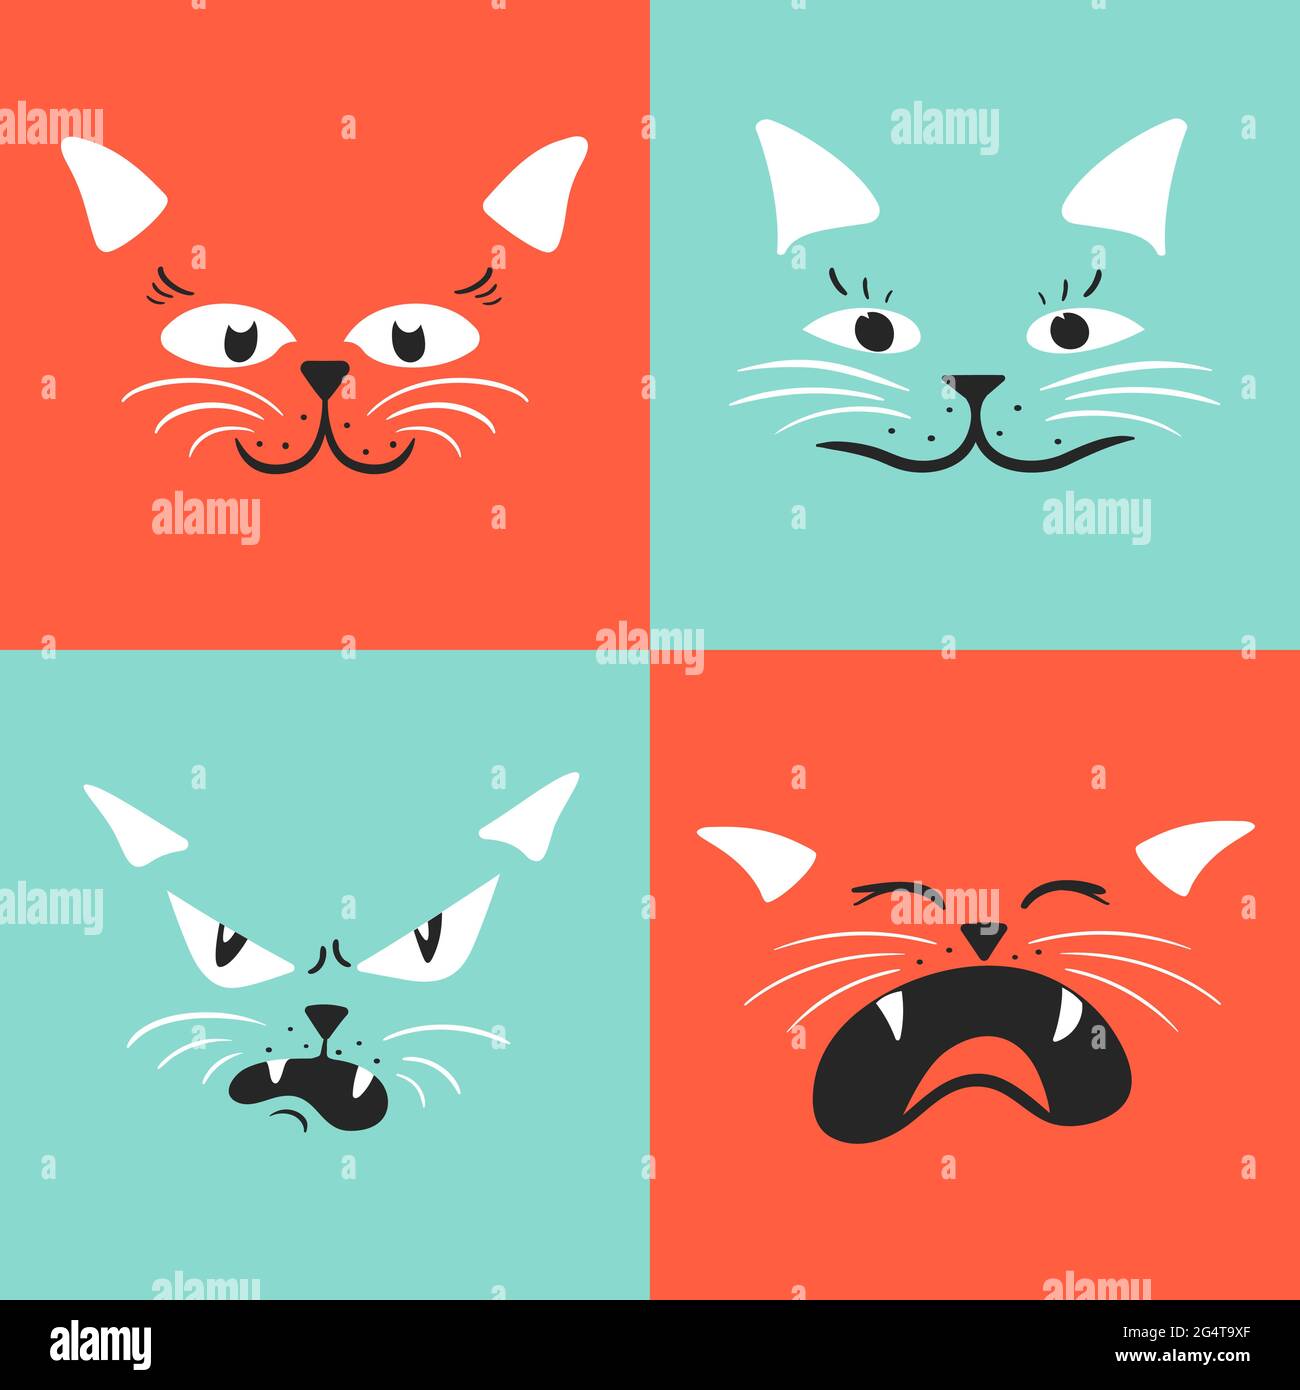 Sad Crying Cat. Cartoon Vector Illustration. Crying Cat Meme. Cat Face  Stock Vector - Illustration of character, design: 70606013